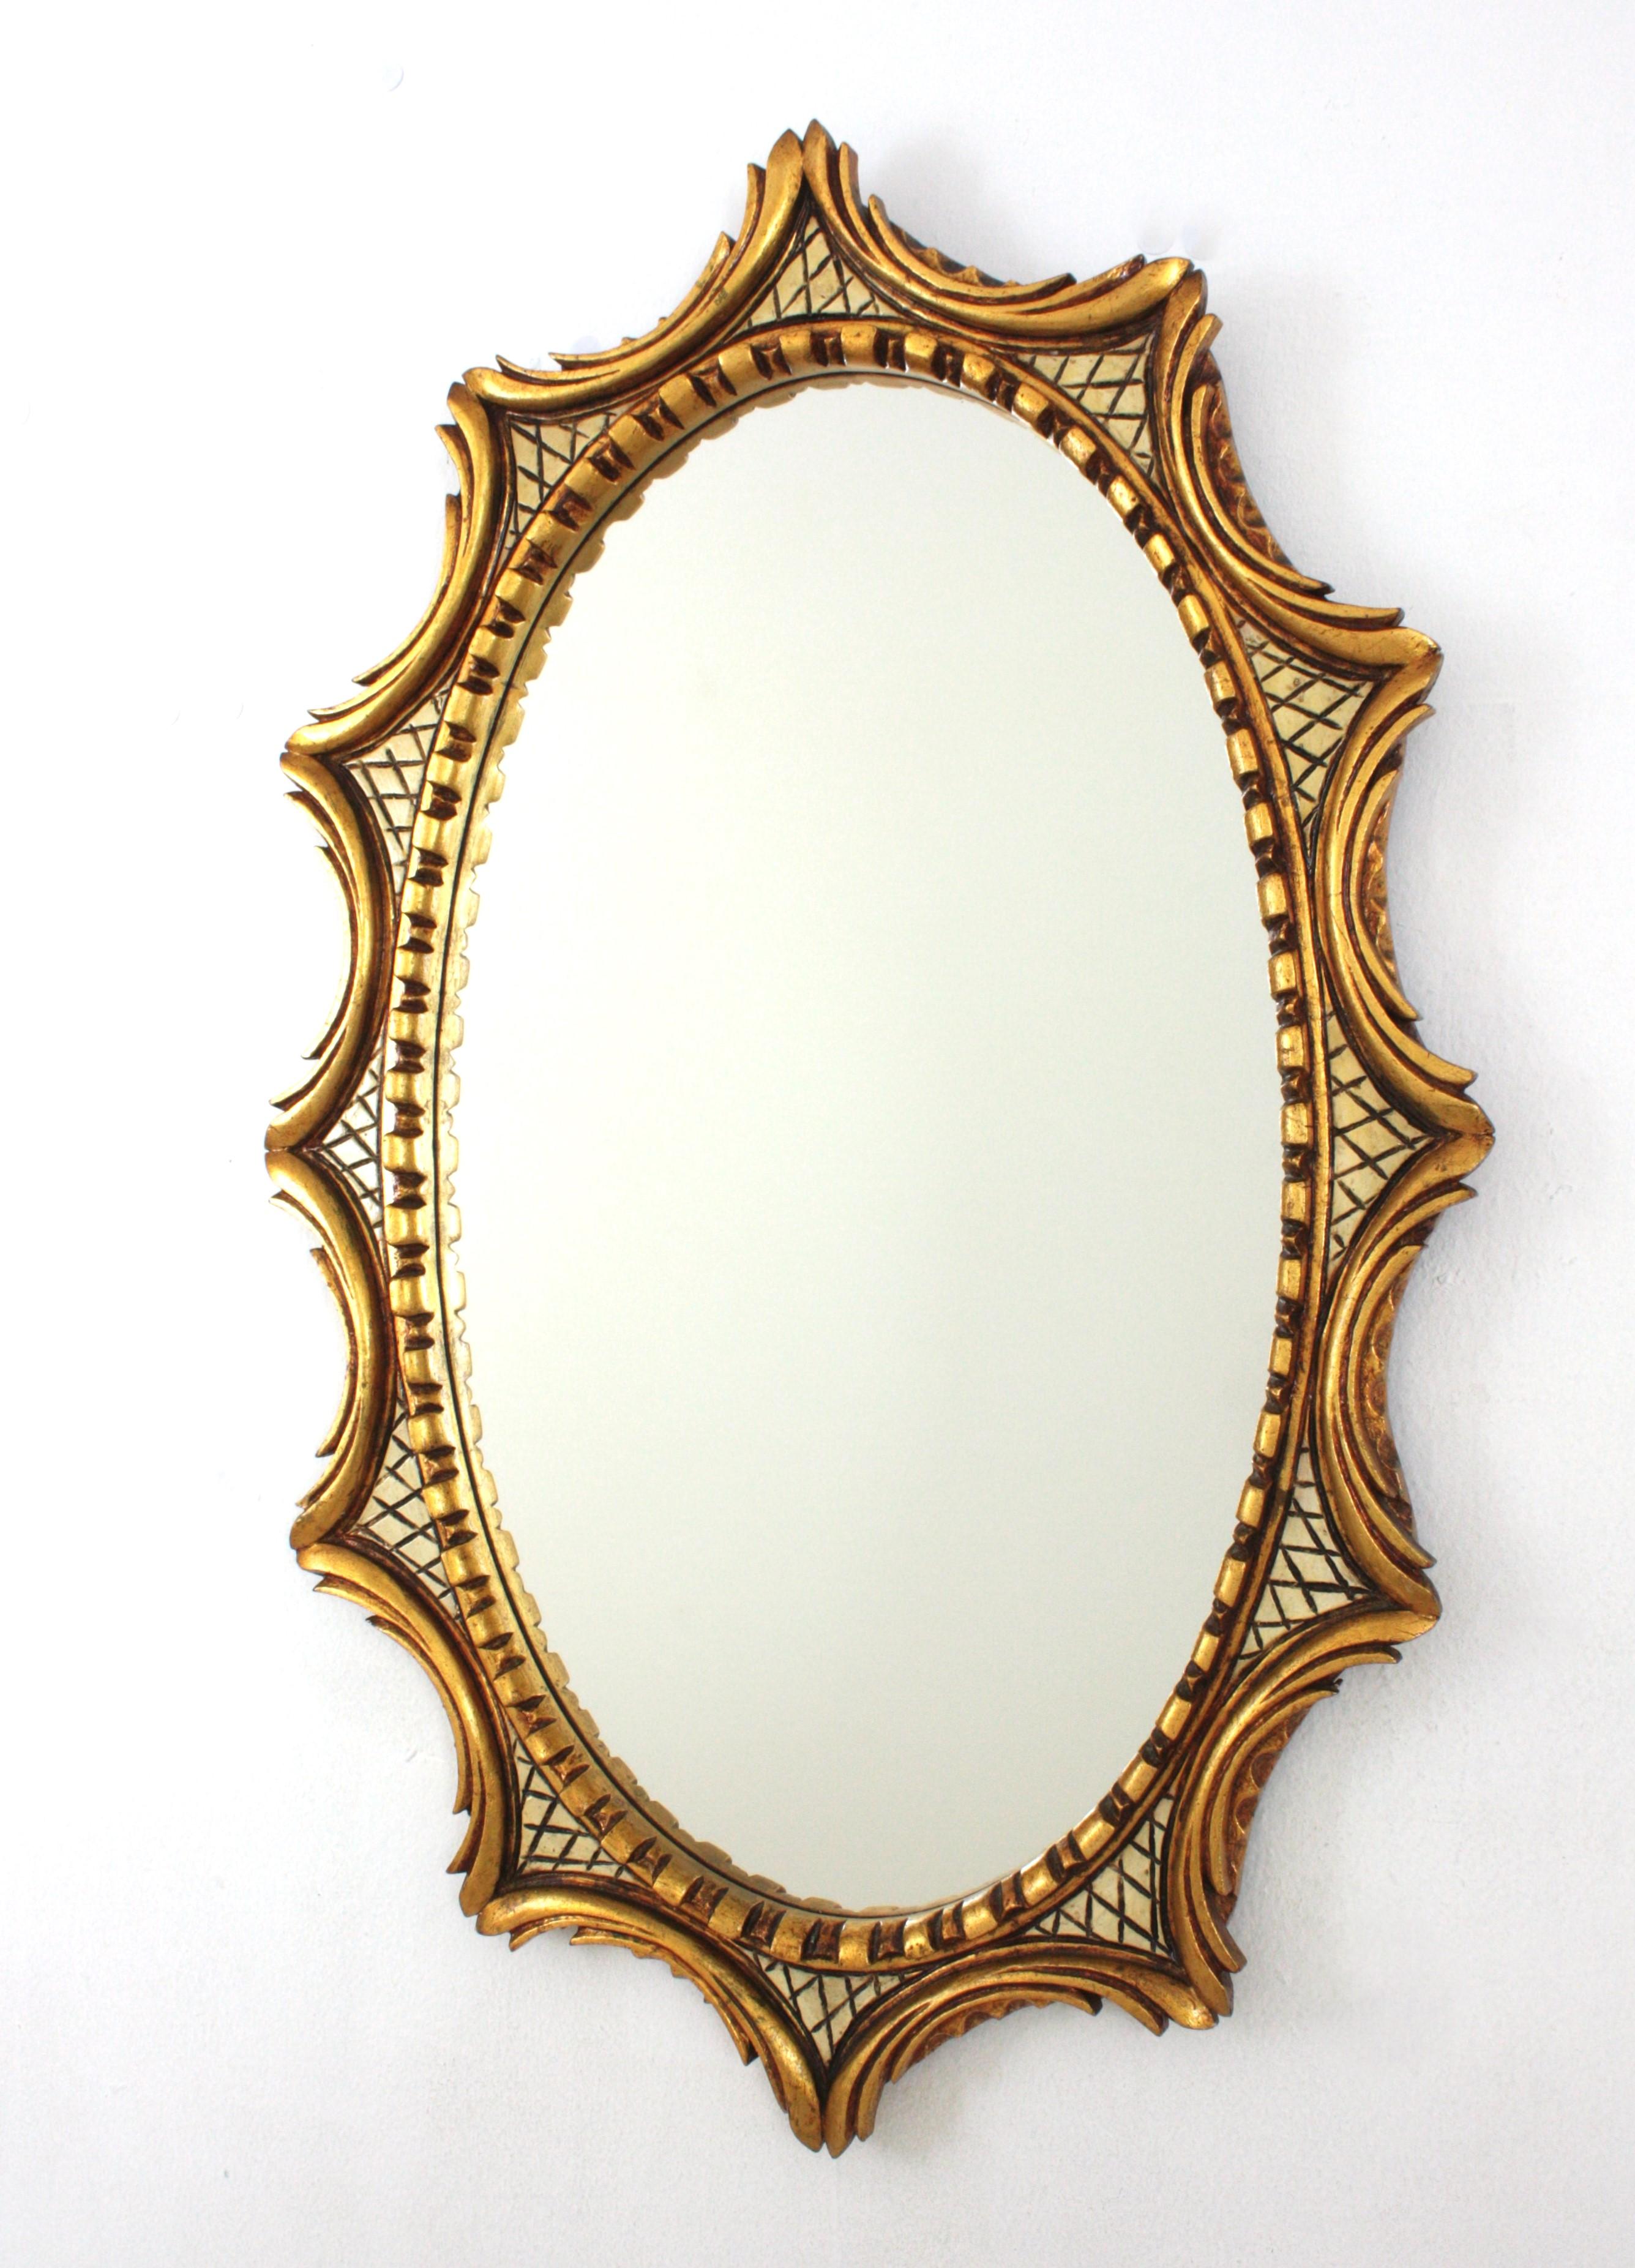 Spanish Sunburst Oval Mirror, Gilt & Beige Carved Wood, 1950s For Sale 4